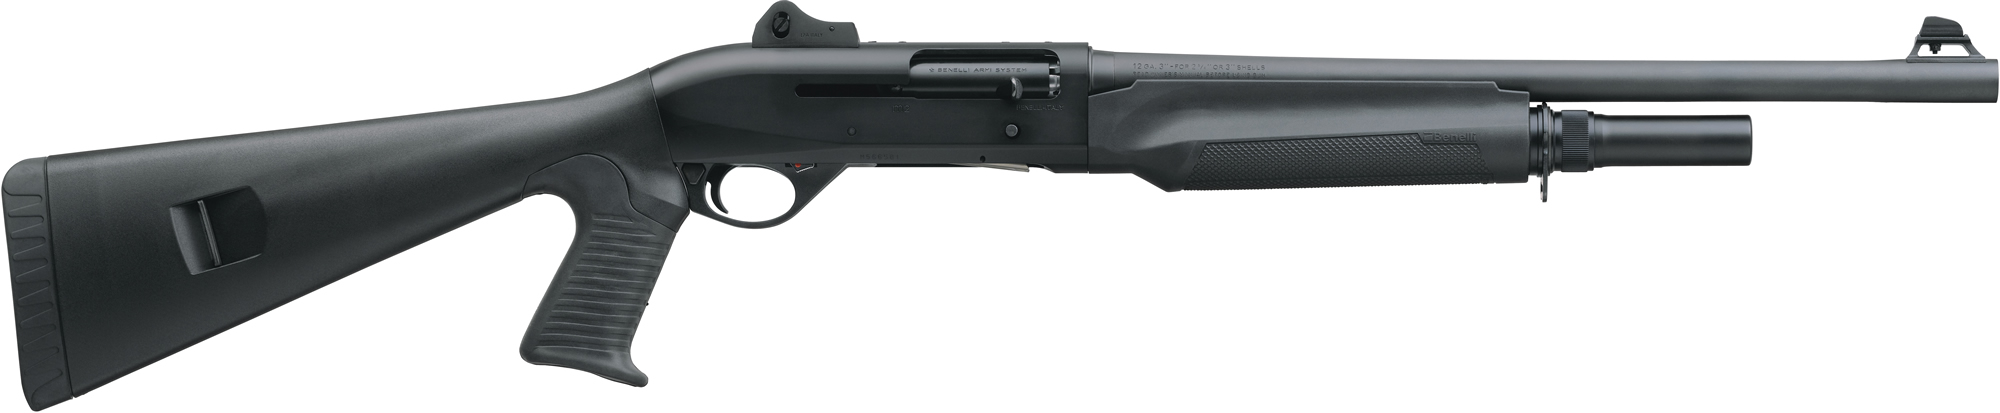 Benelli M2 Tactical Semi-Auto Shotgun 11052, 12 Gauge, 18.5" , 3" Chmbr, Black Synthetic, Pistol Grip, Ghost Ring Sight